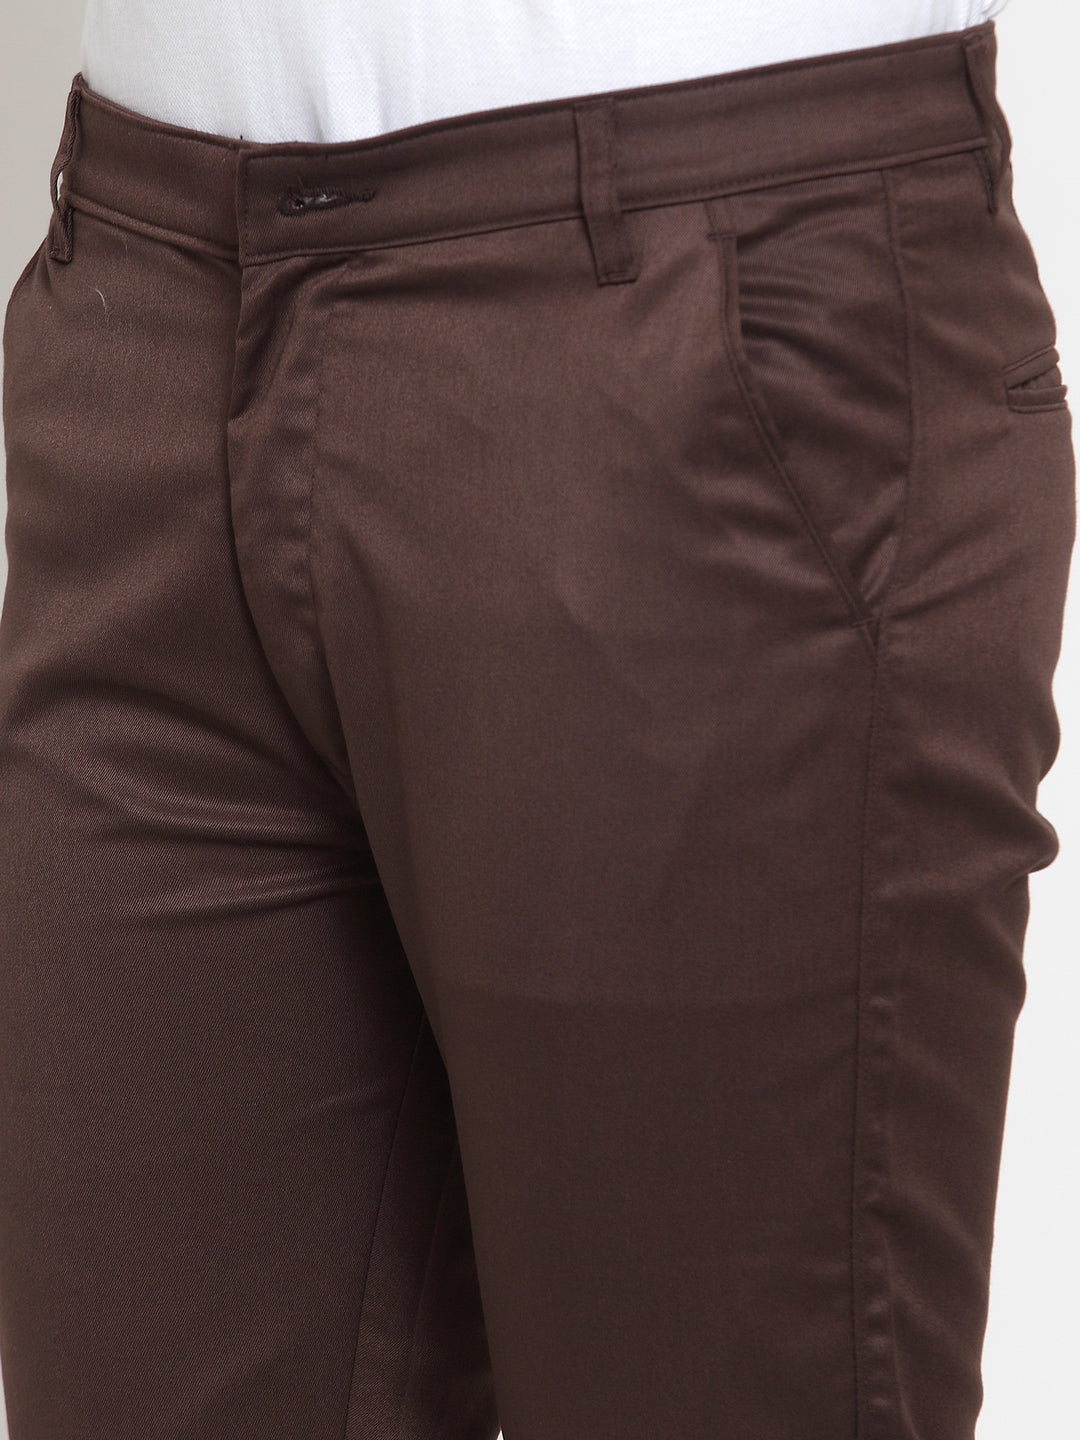 Jainish Men's Brown Solid Formal Trousers